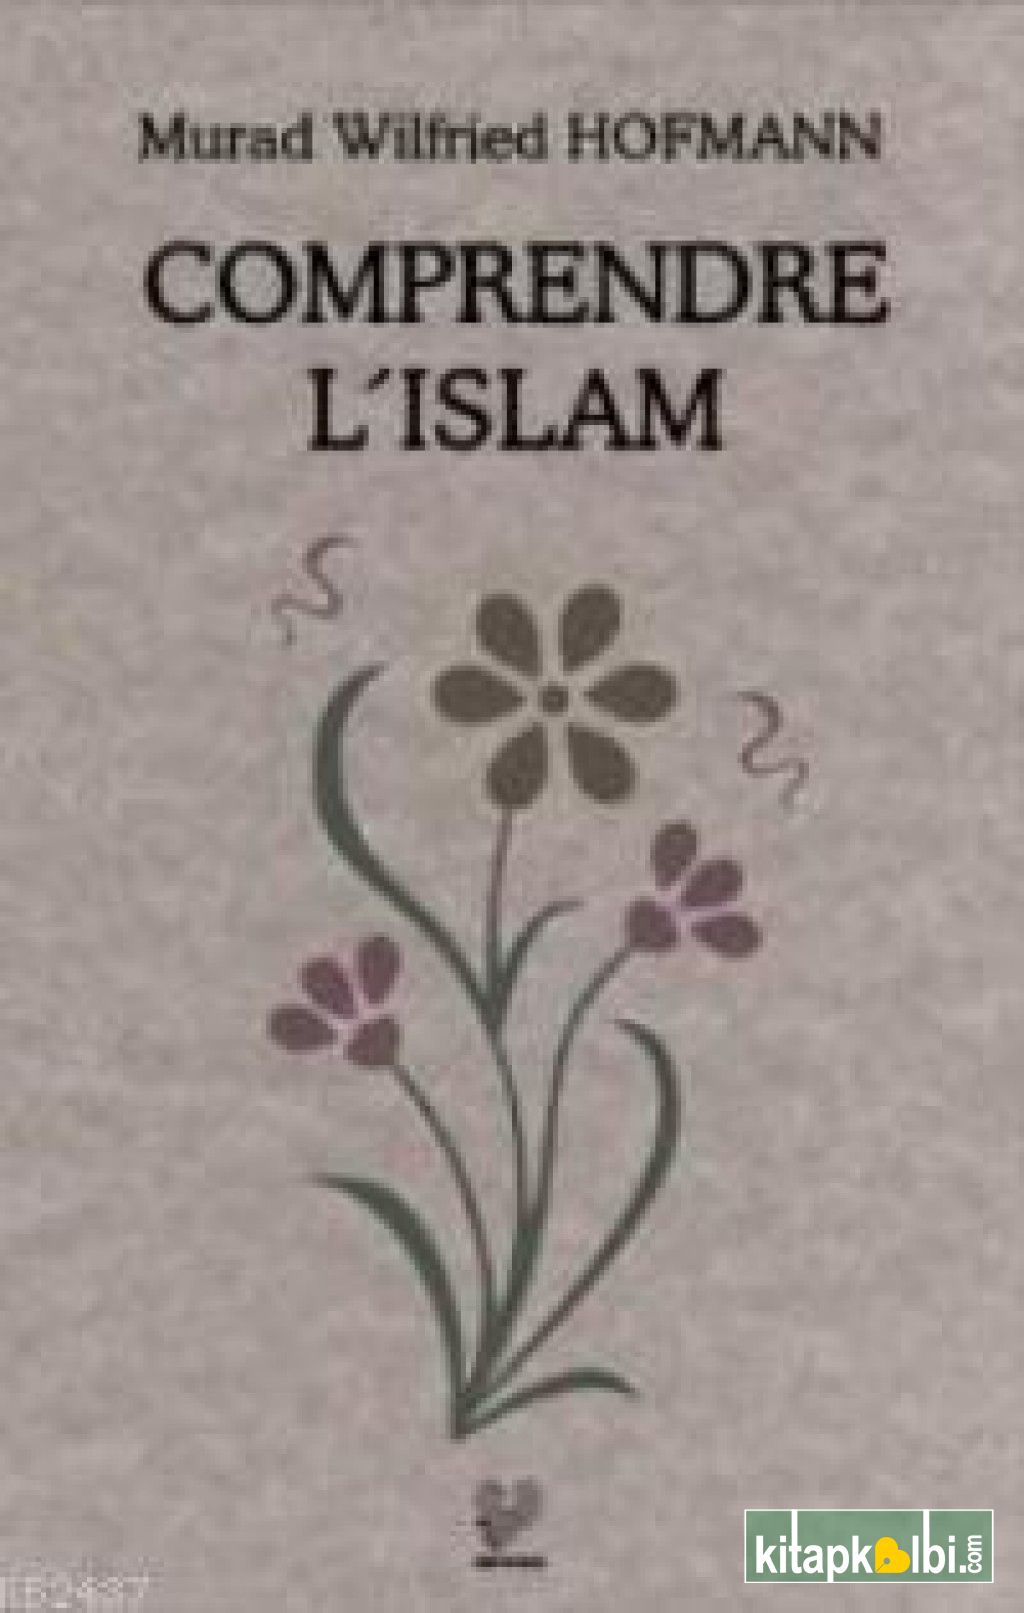 Comprendre L'ıslam(Fransızca Konferanslar)